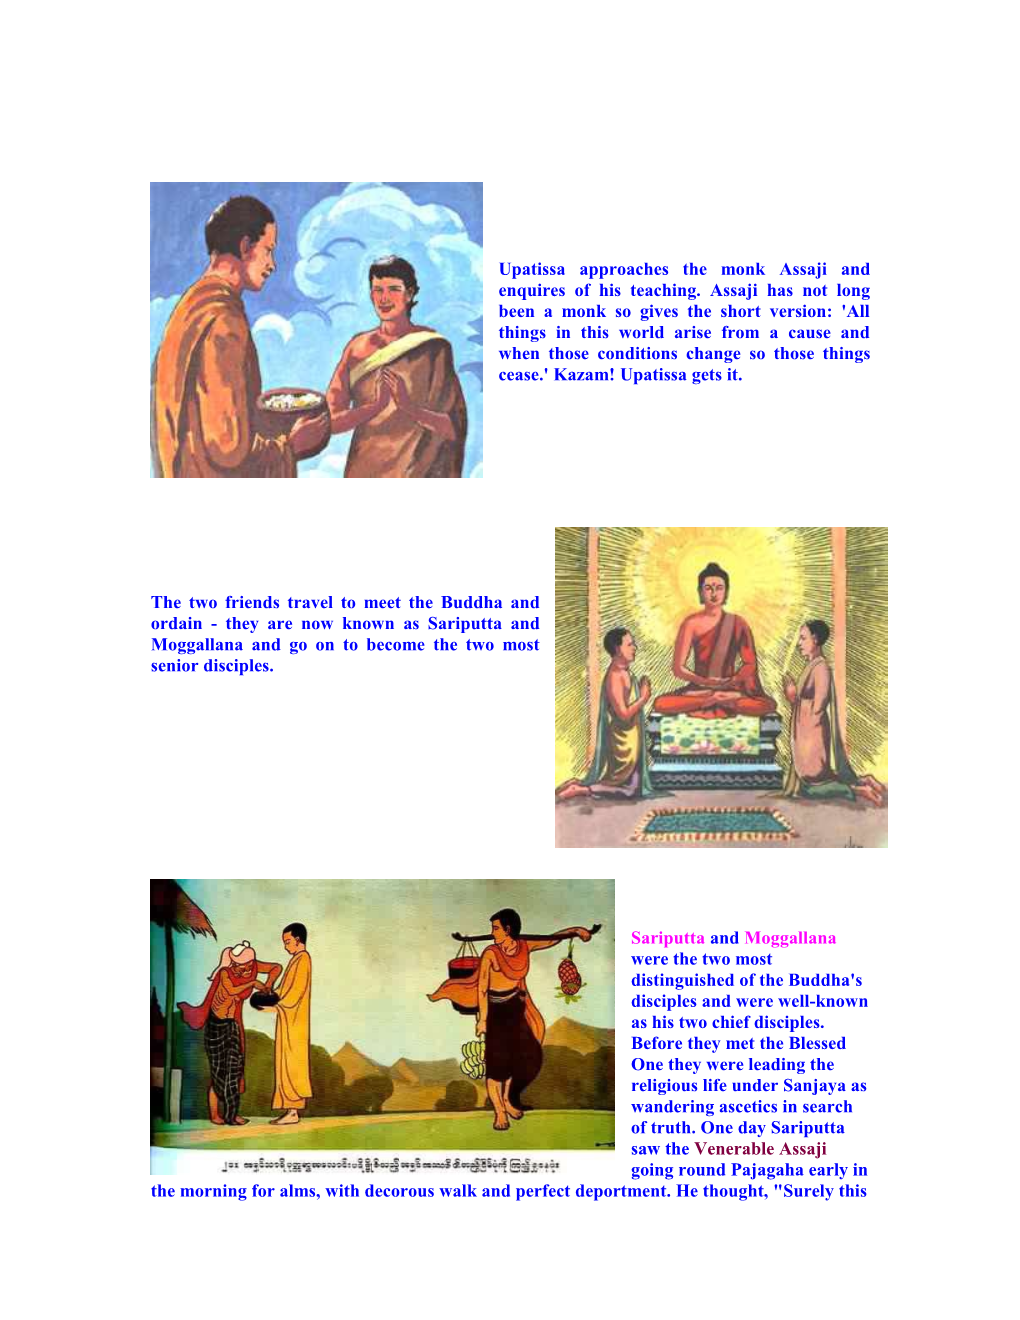 Upatissa Approaches the Monk Assaji and Enquires of His Teaching. Assaji Has Not Long